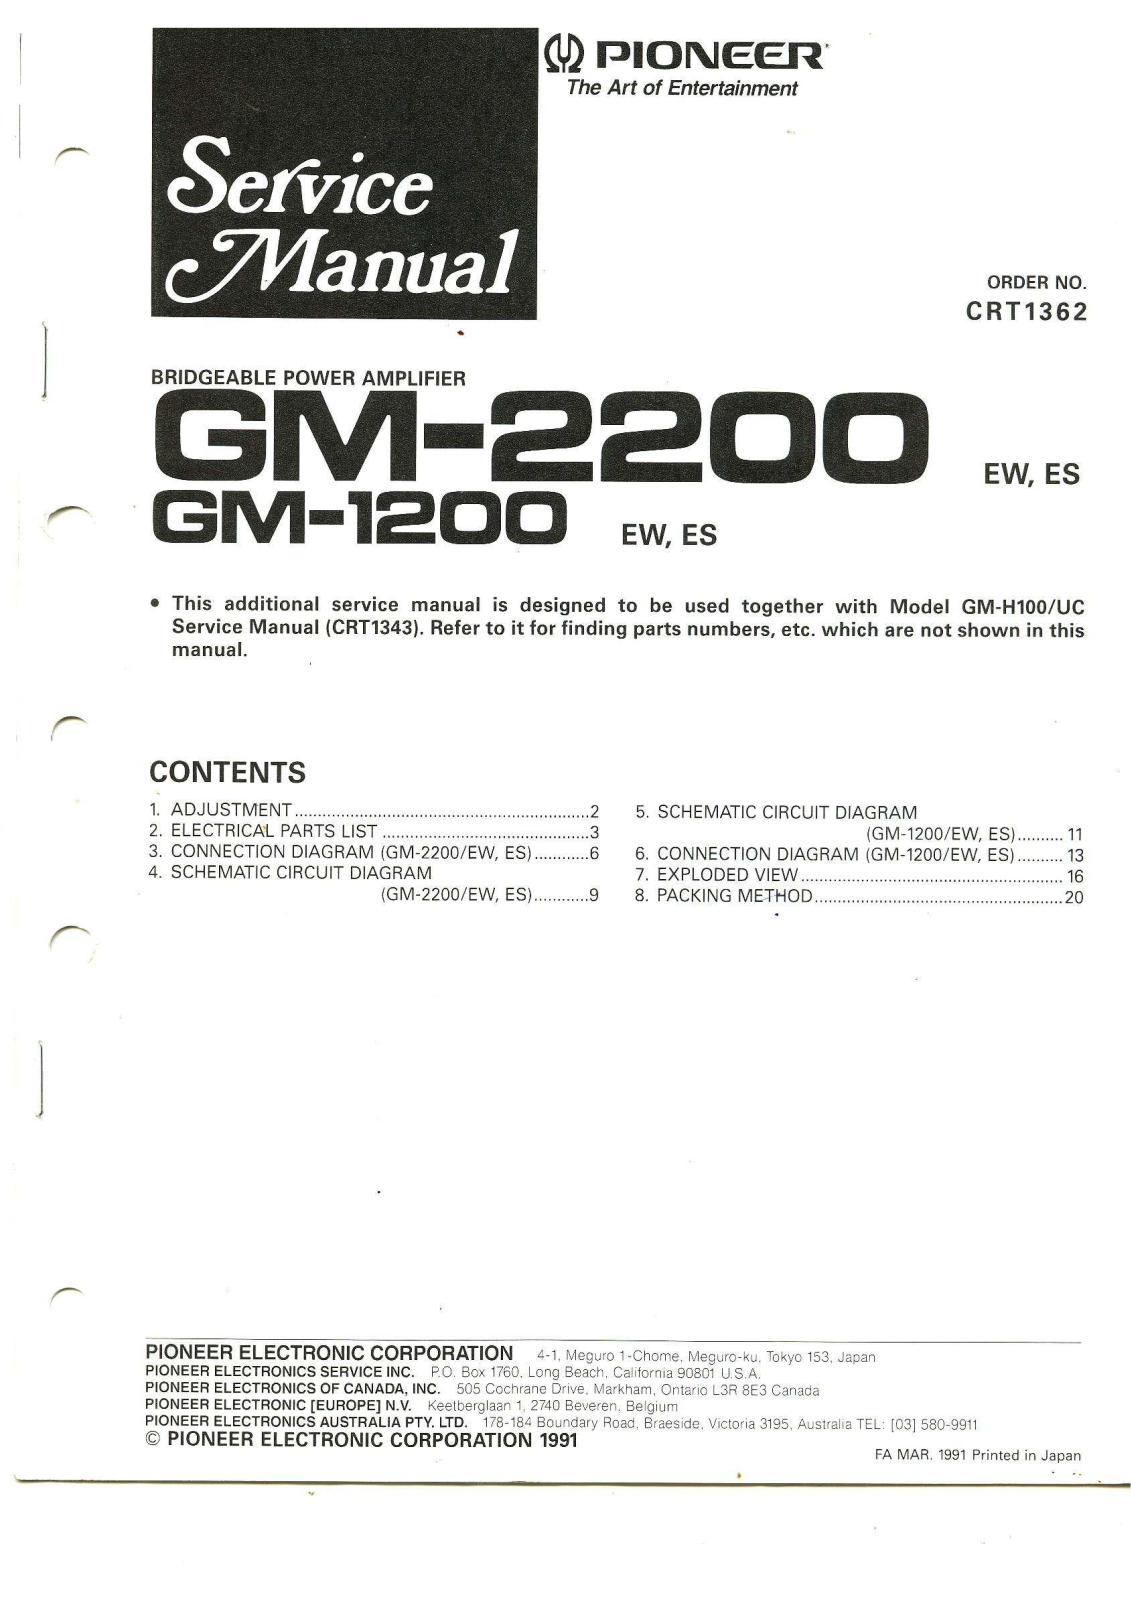 Pioneer GM-2200, GM-1200 Schematic